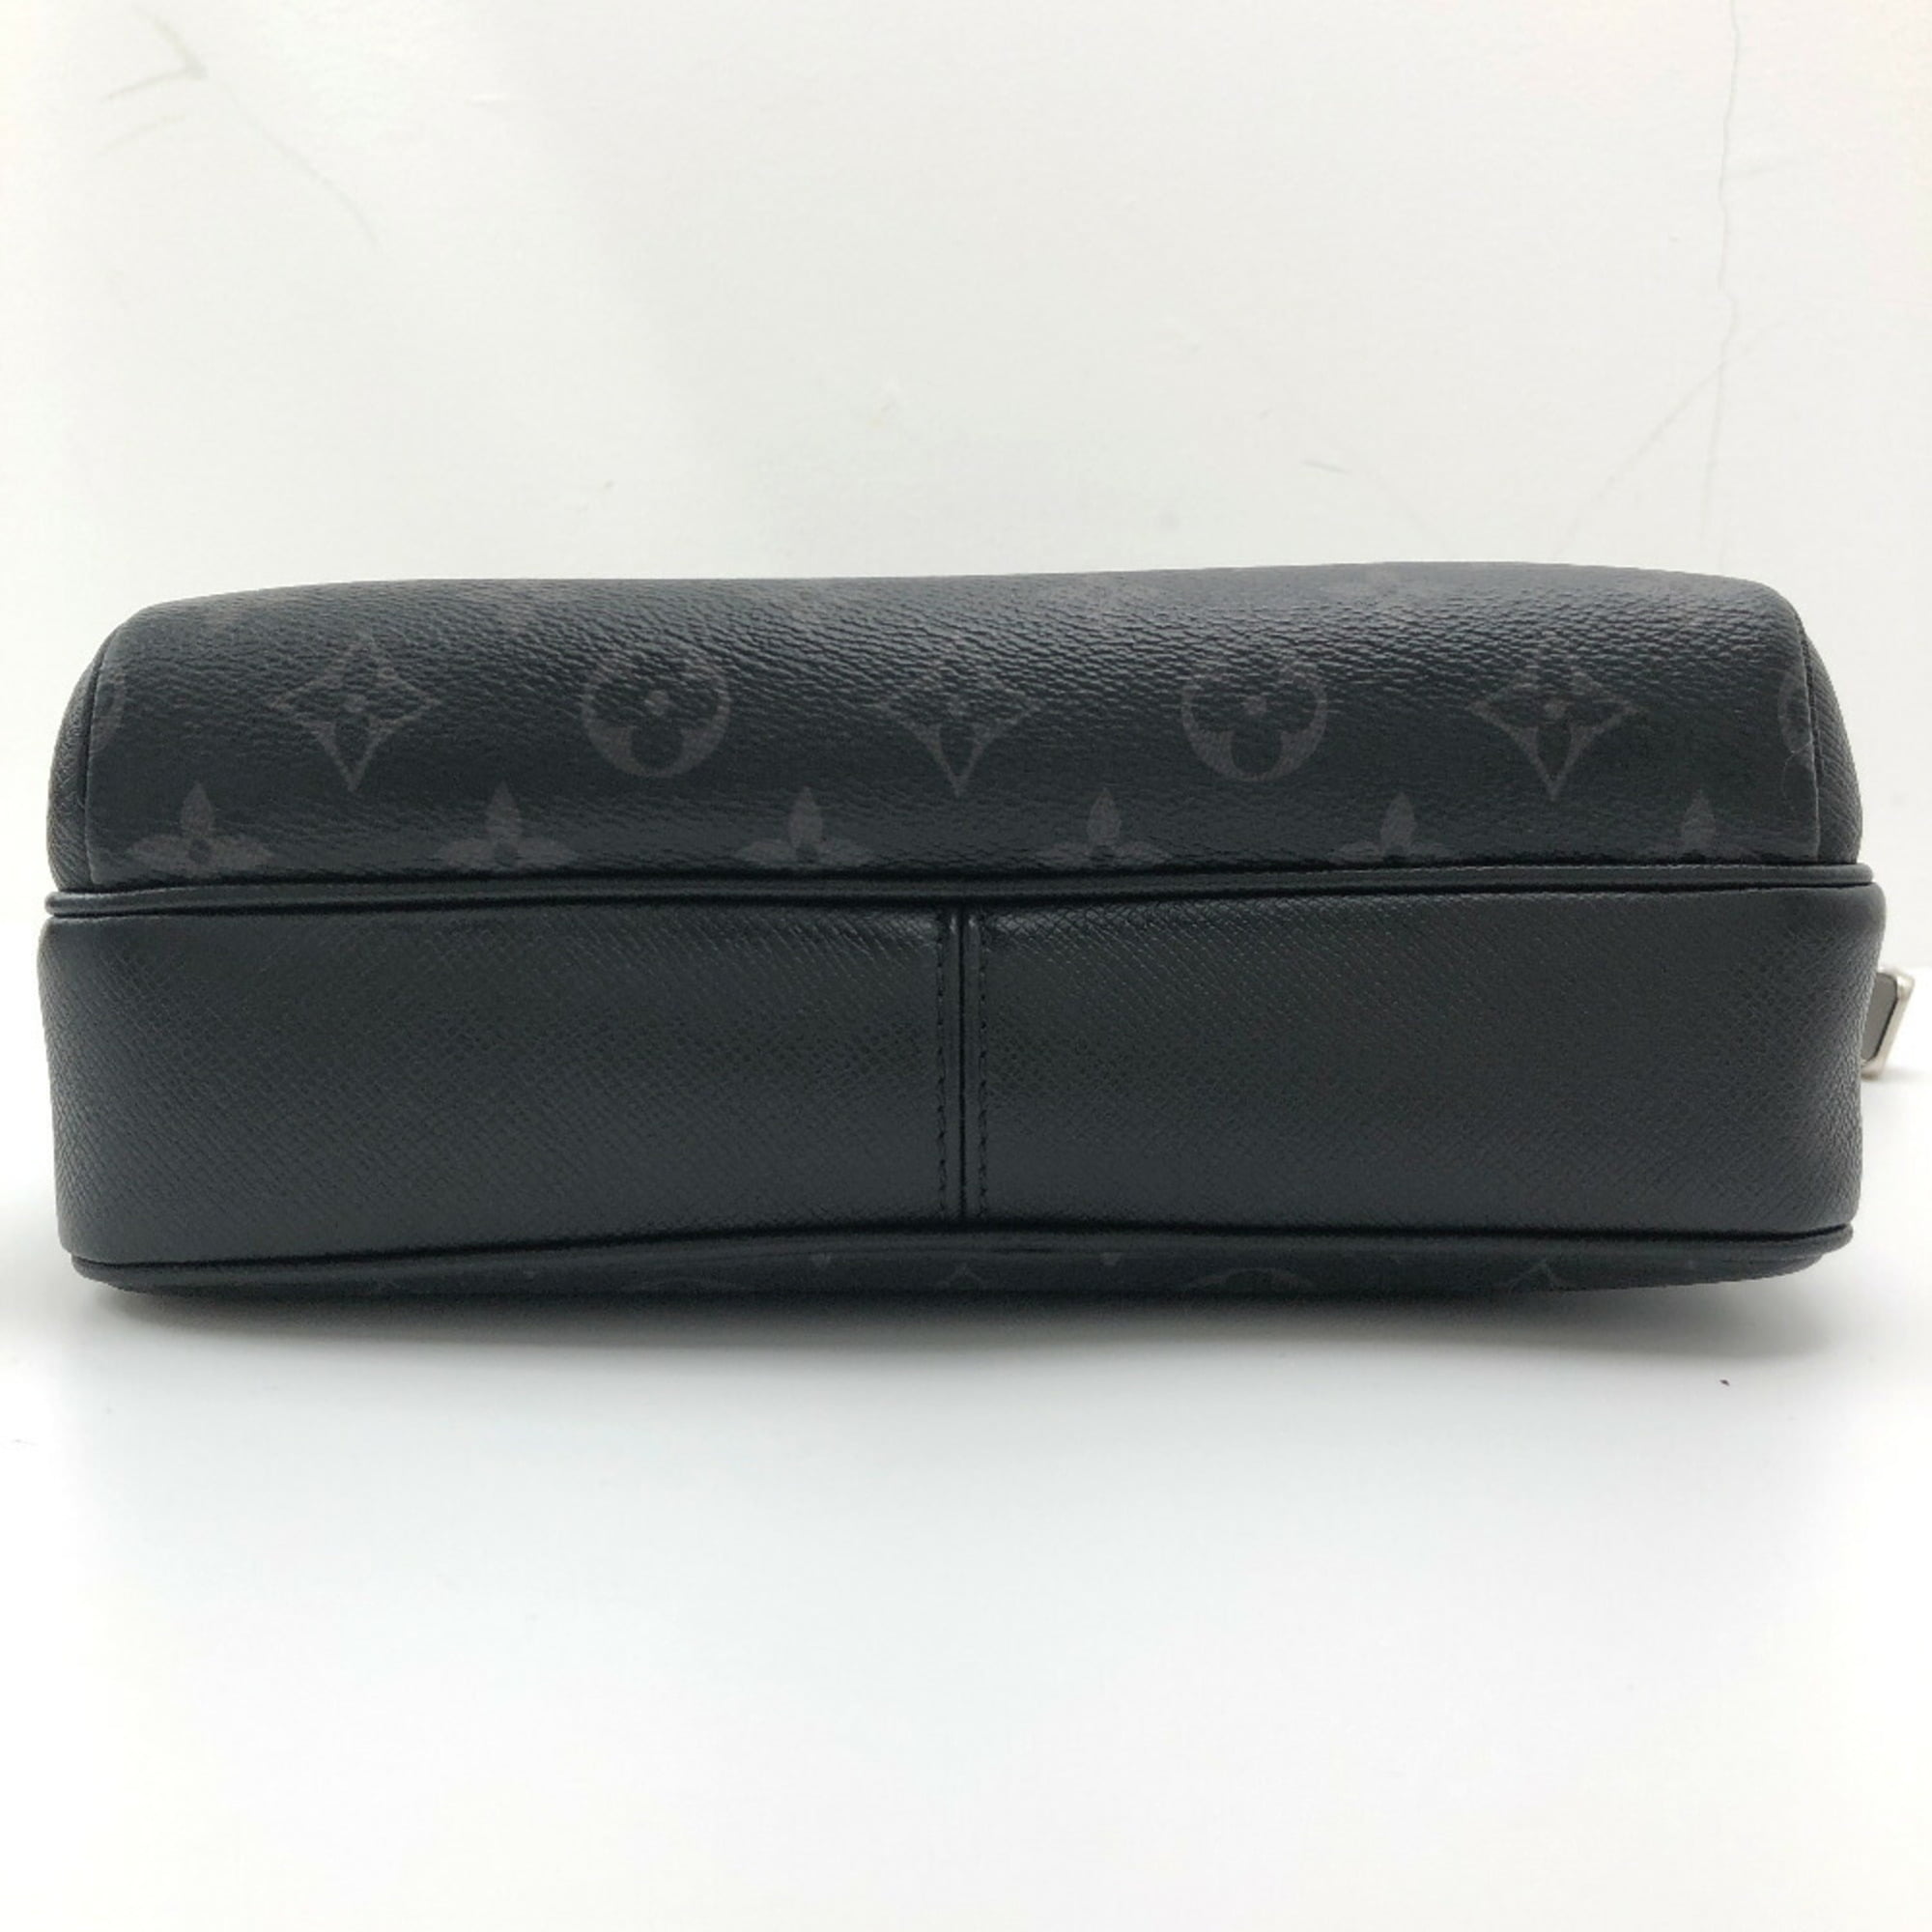 Concorde leather handbag Louis Vuitton Black in Leather - 35689402